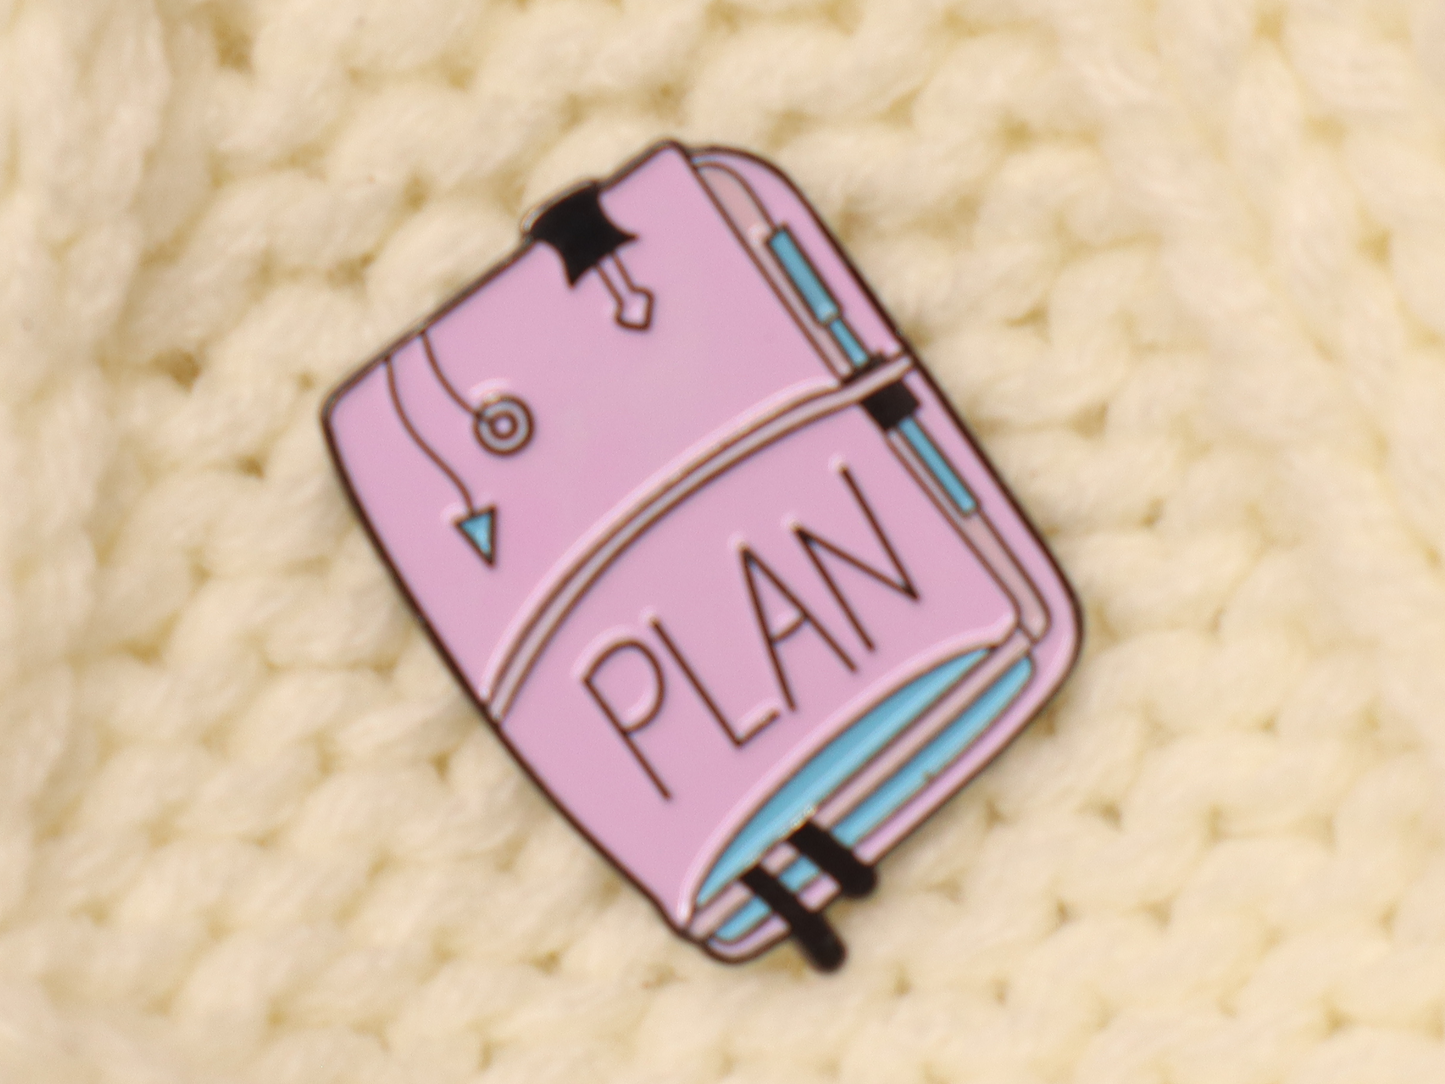 Planner Pin